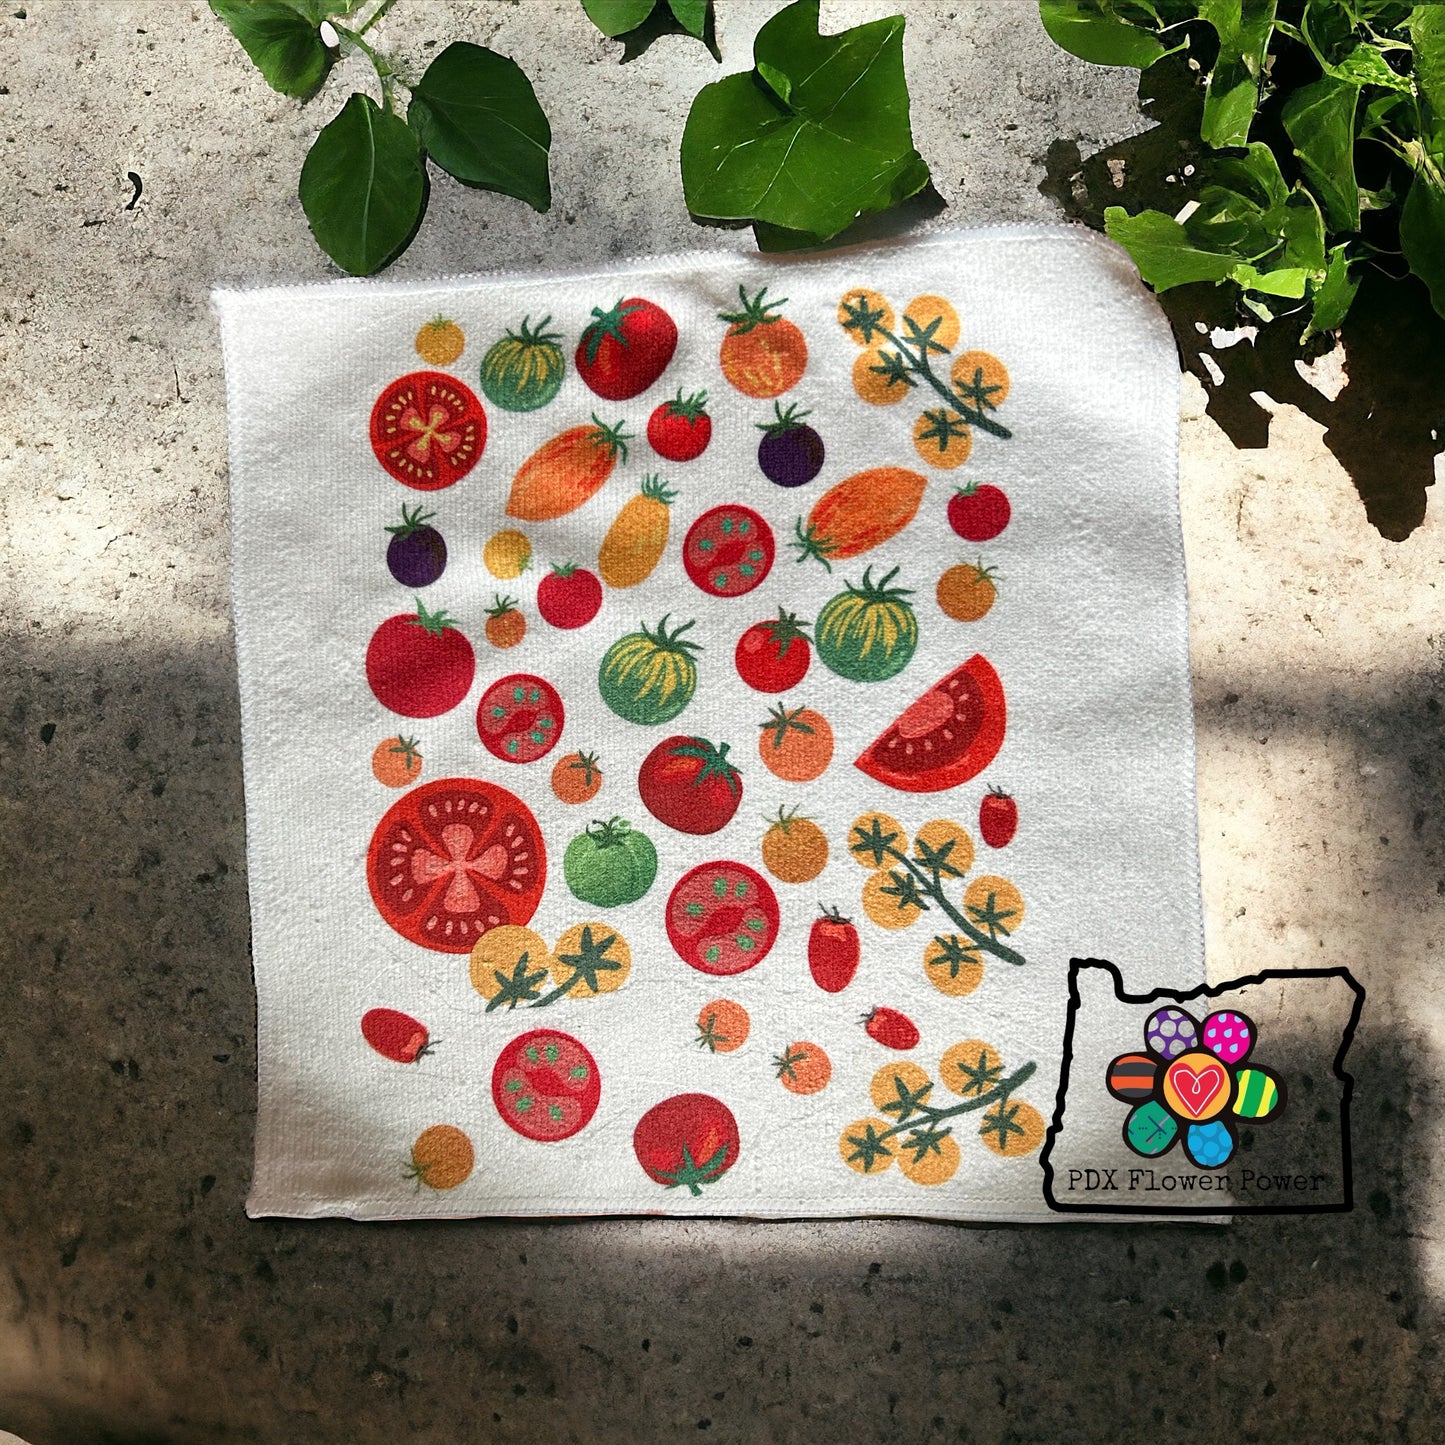 Heirloom tomato towel set, fun tomato towel set, garden towels, tomato gifts.